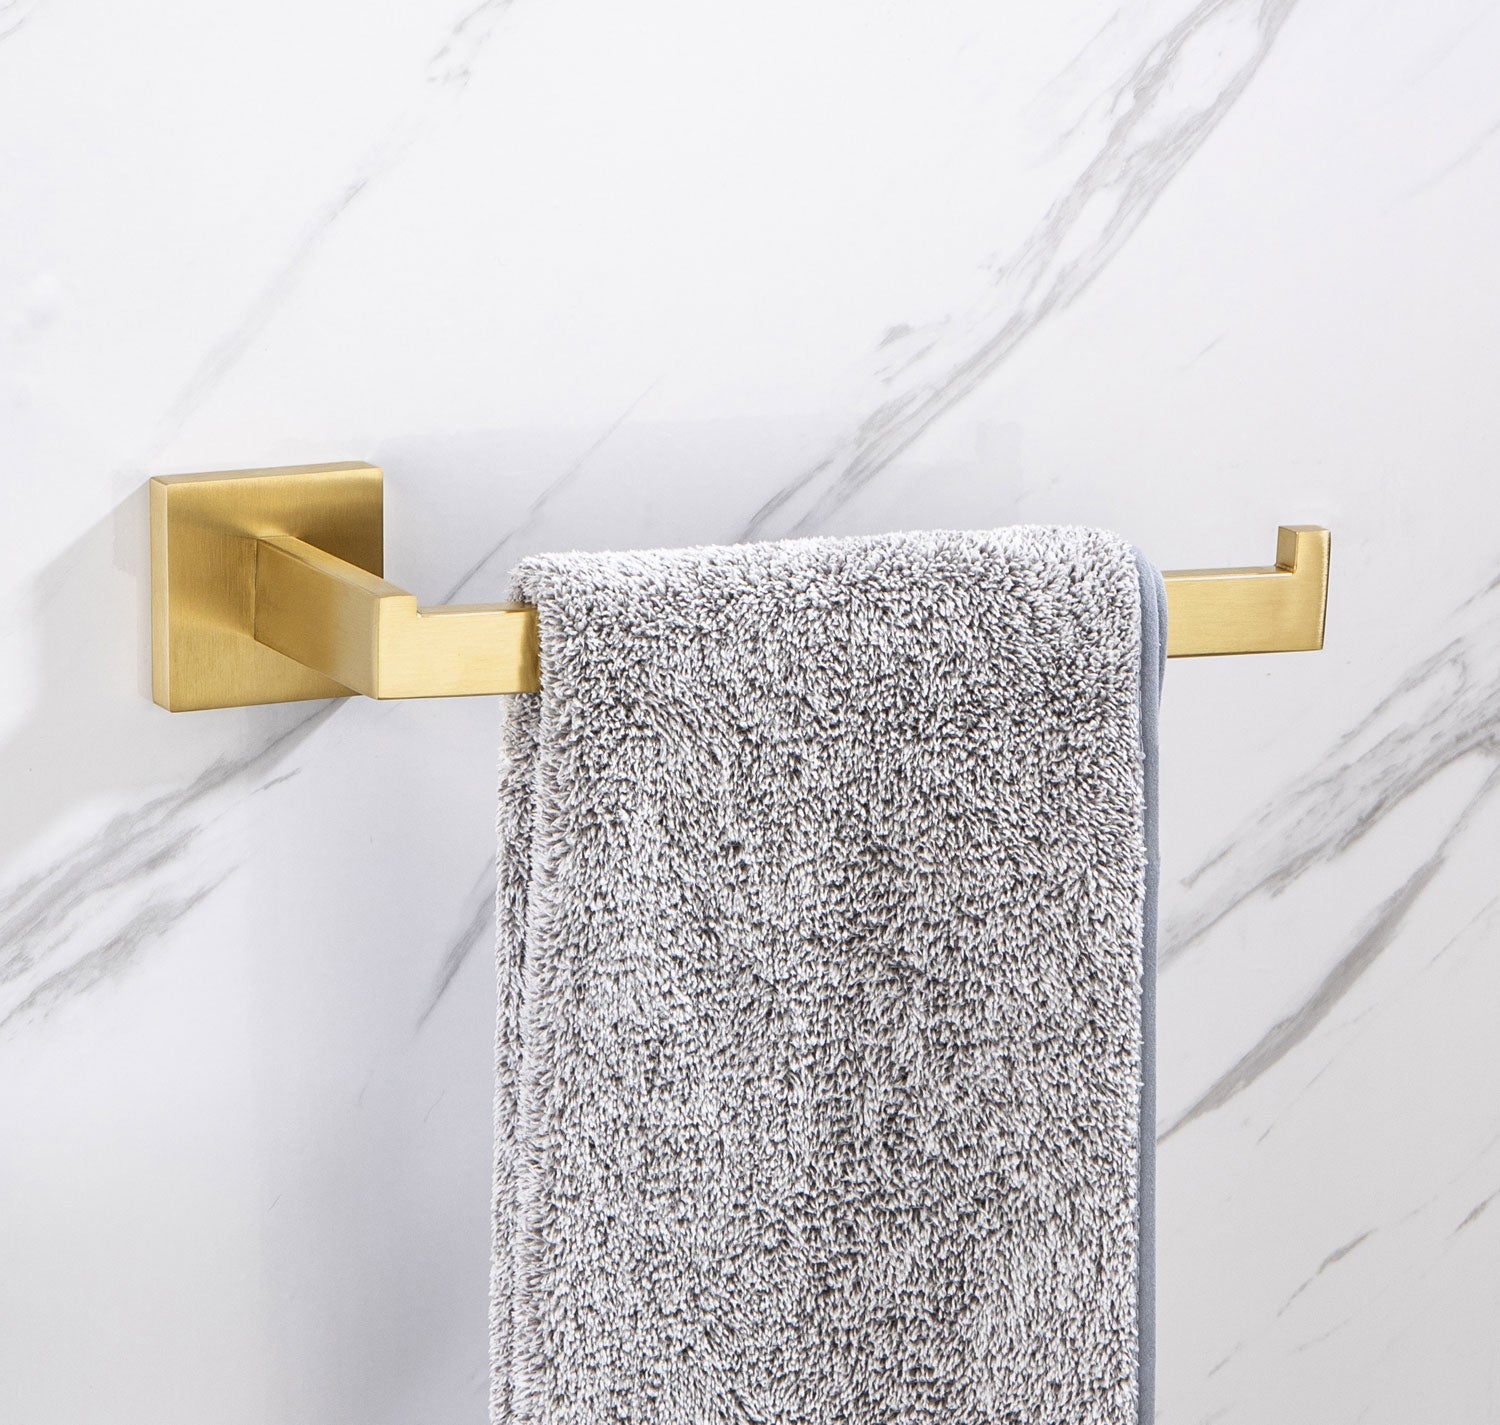 Seasons® 4-Piece Bath Accessories Kit W/ Towel Bar (Brushed Nickel)